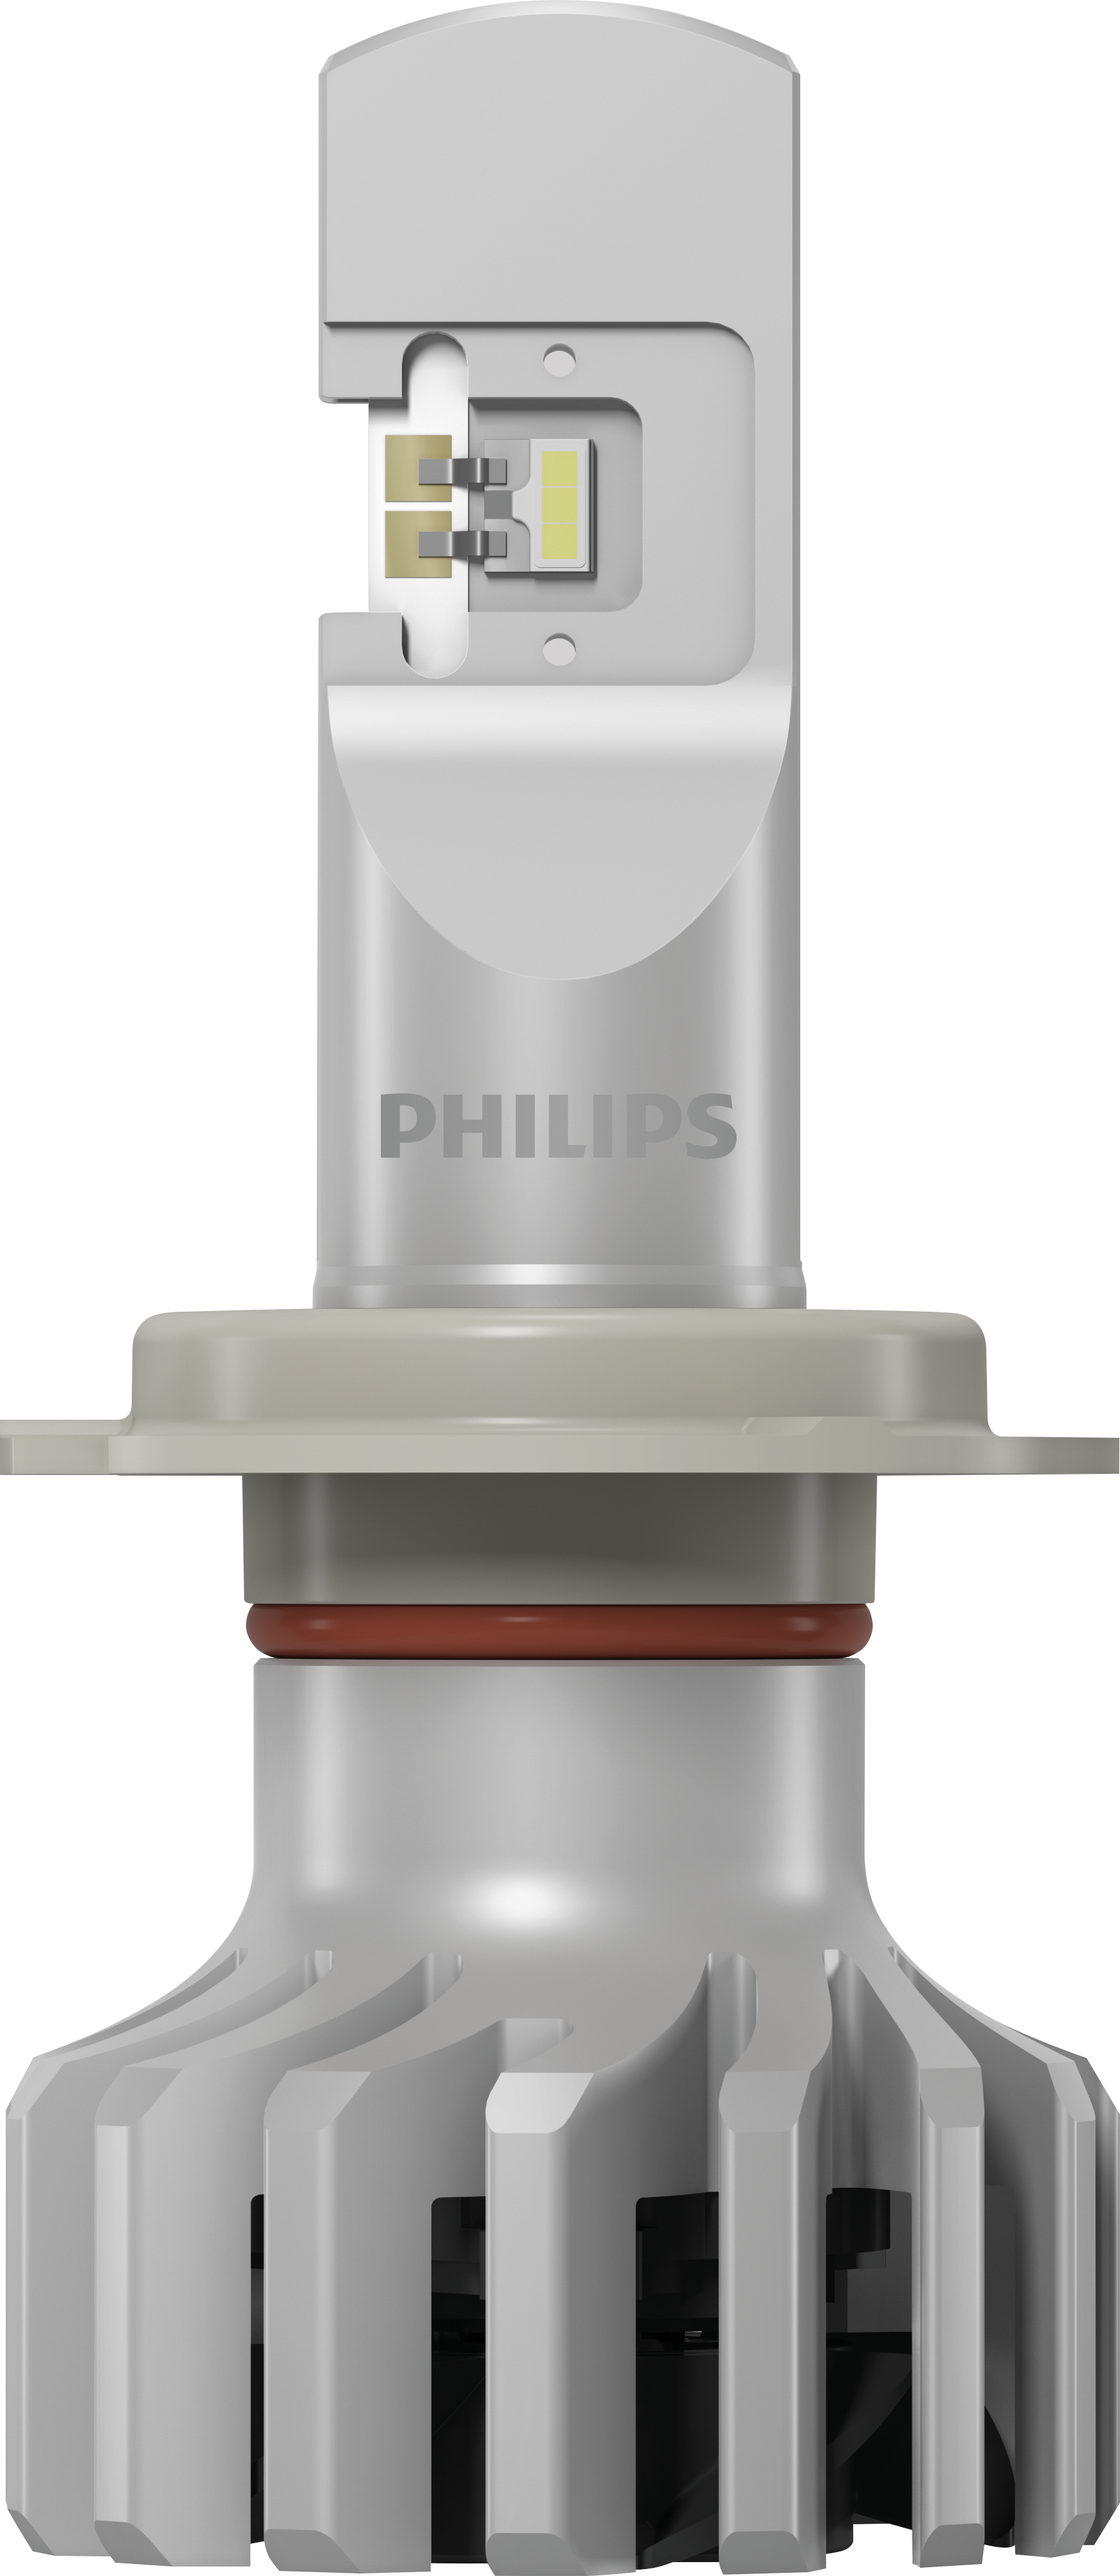 Philips Ultinon Pro6000 LED - Jetzt auch für viele Oldtimer zugelassen!,  Lumileds Germany GmbH, Story - PresseBox